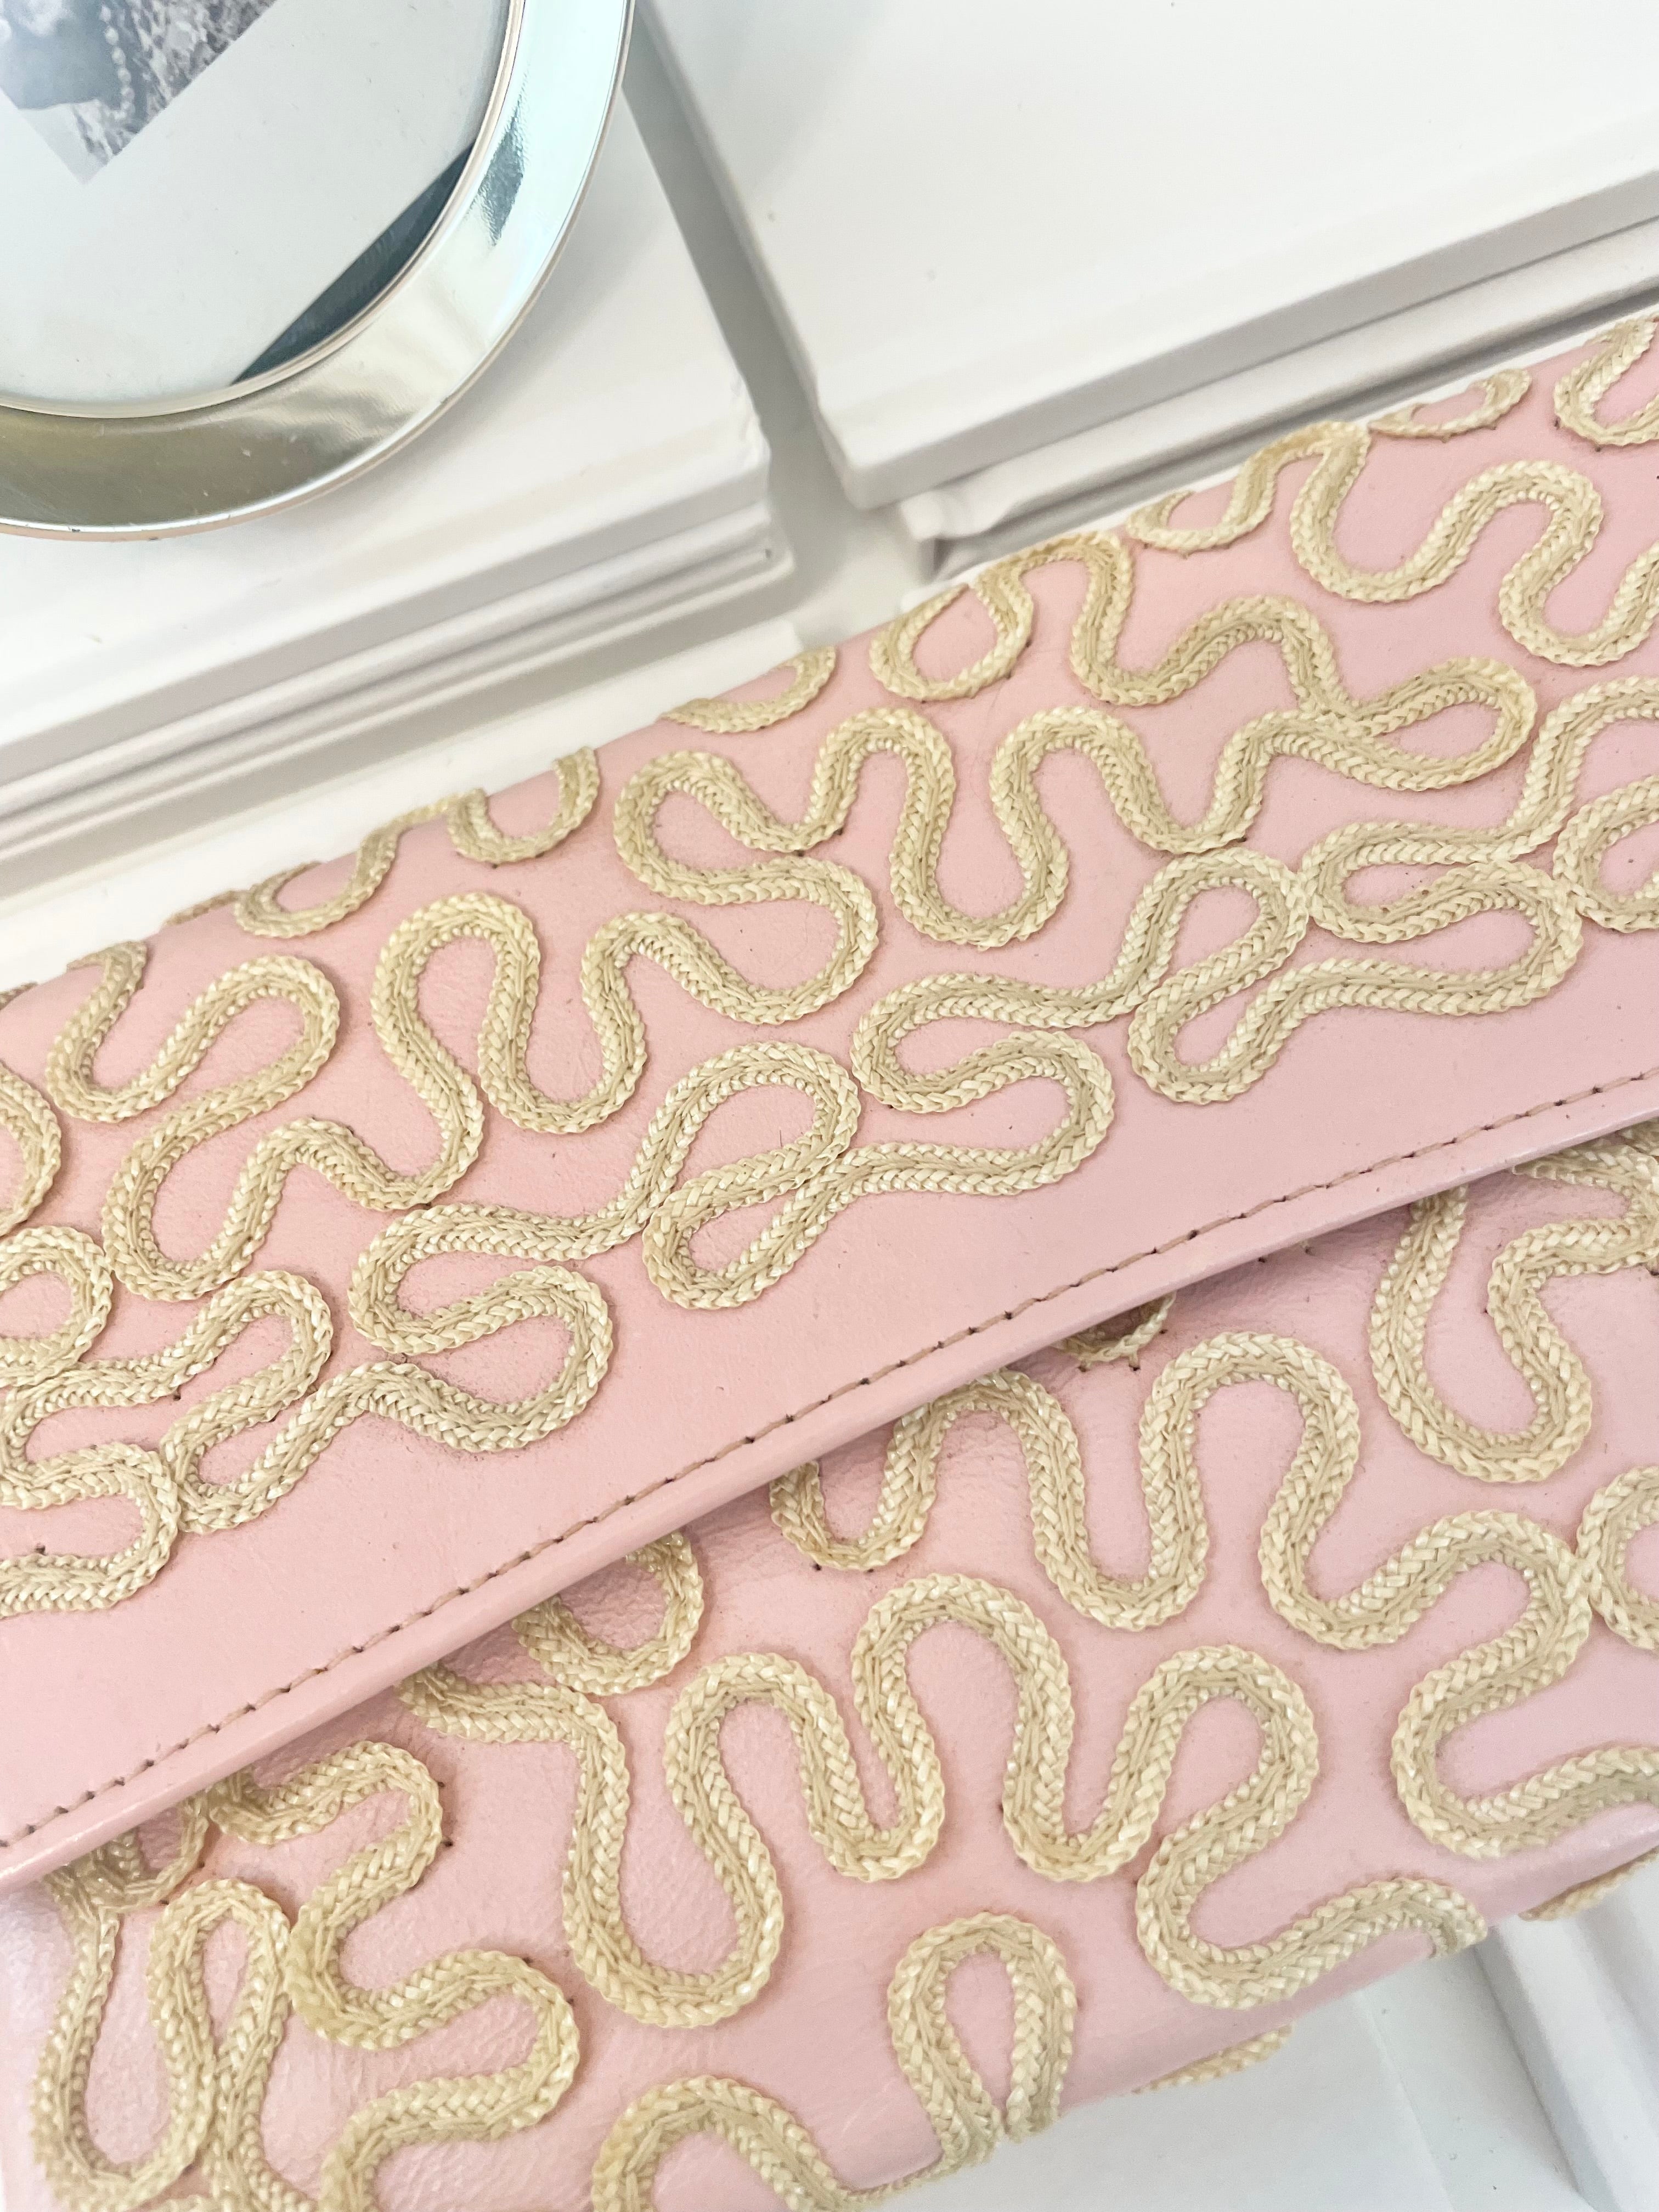 Vintage fabulous feminine soft pink clutch bag... so elegant